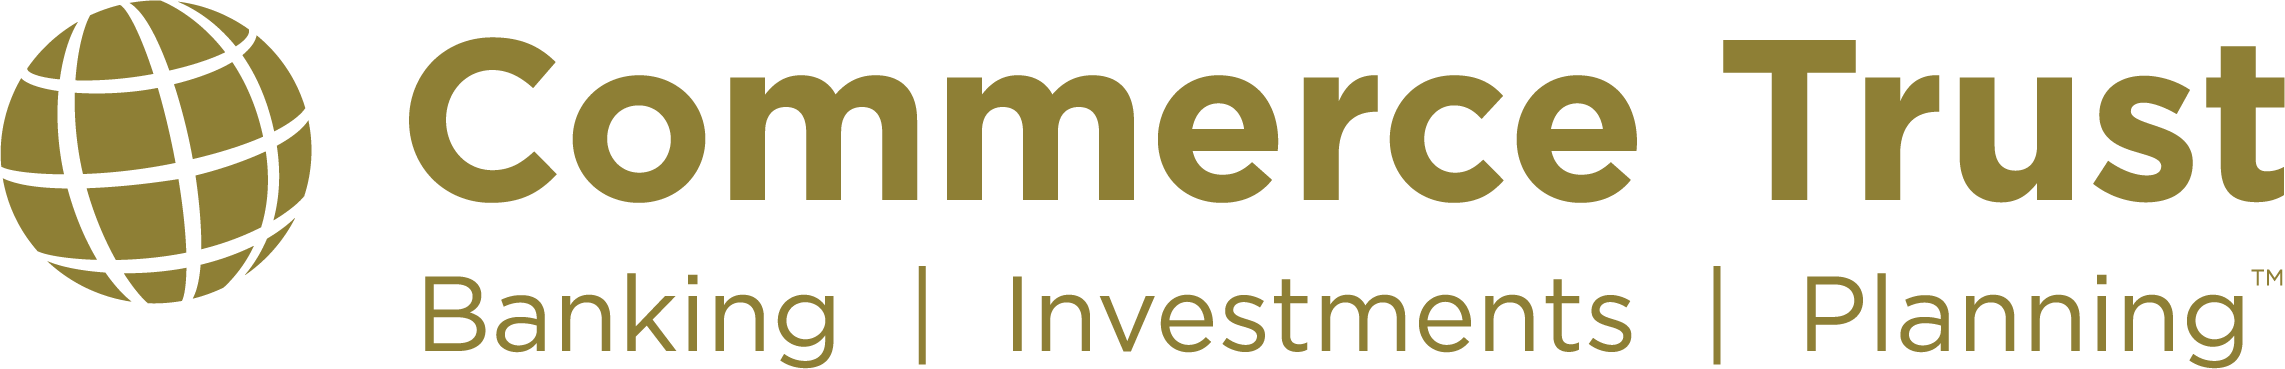 CommerceTrust-Logo-Gold